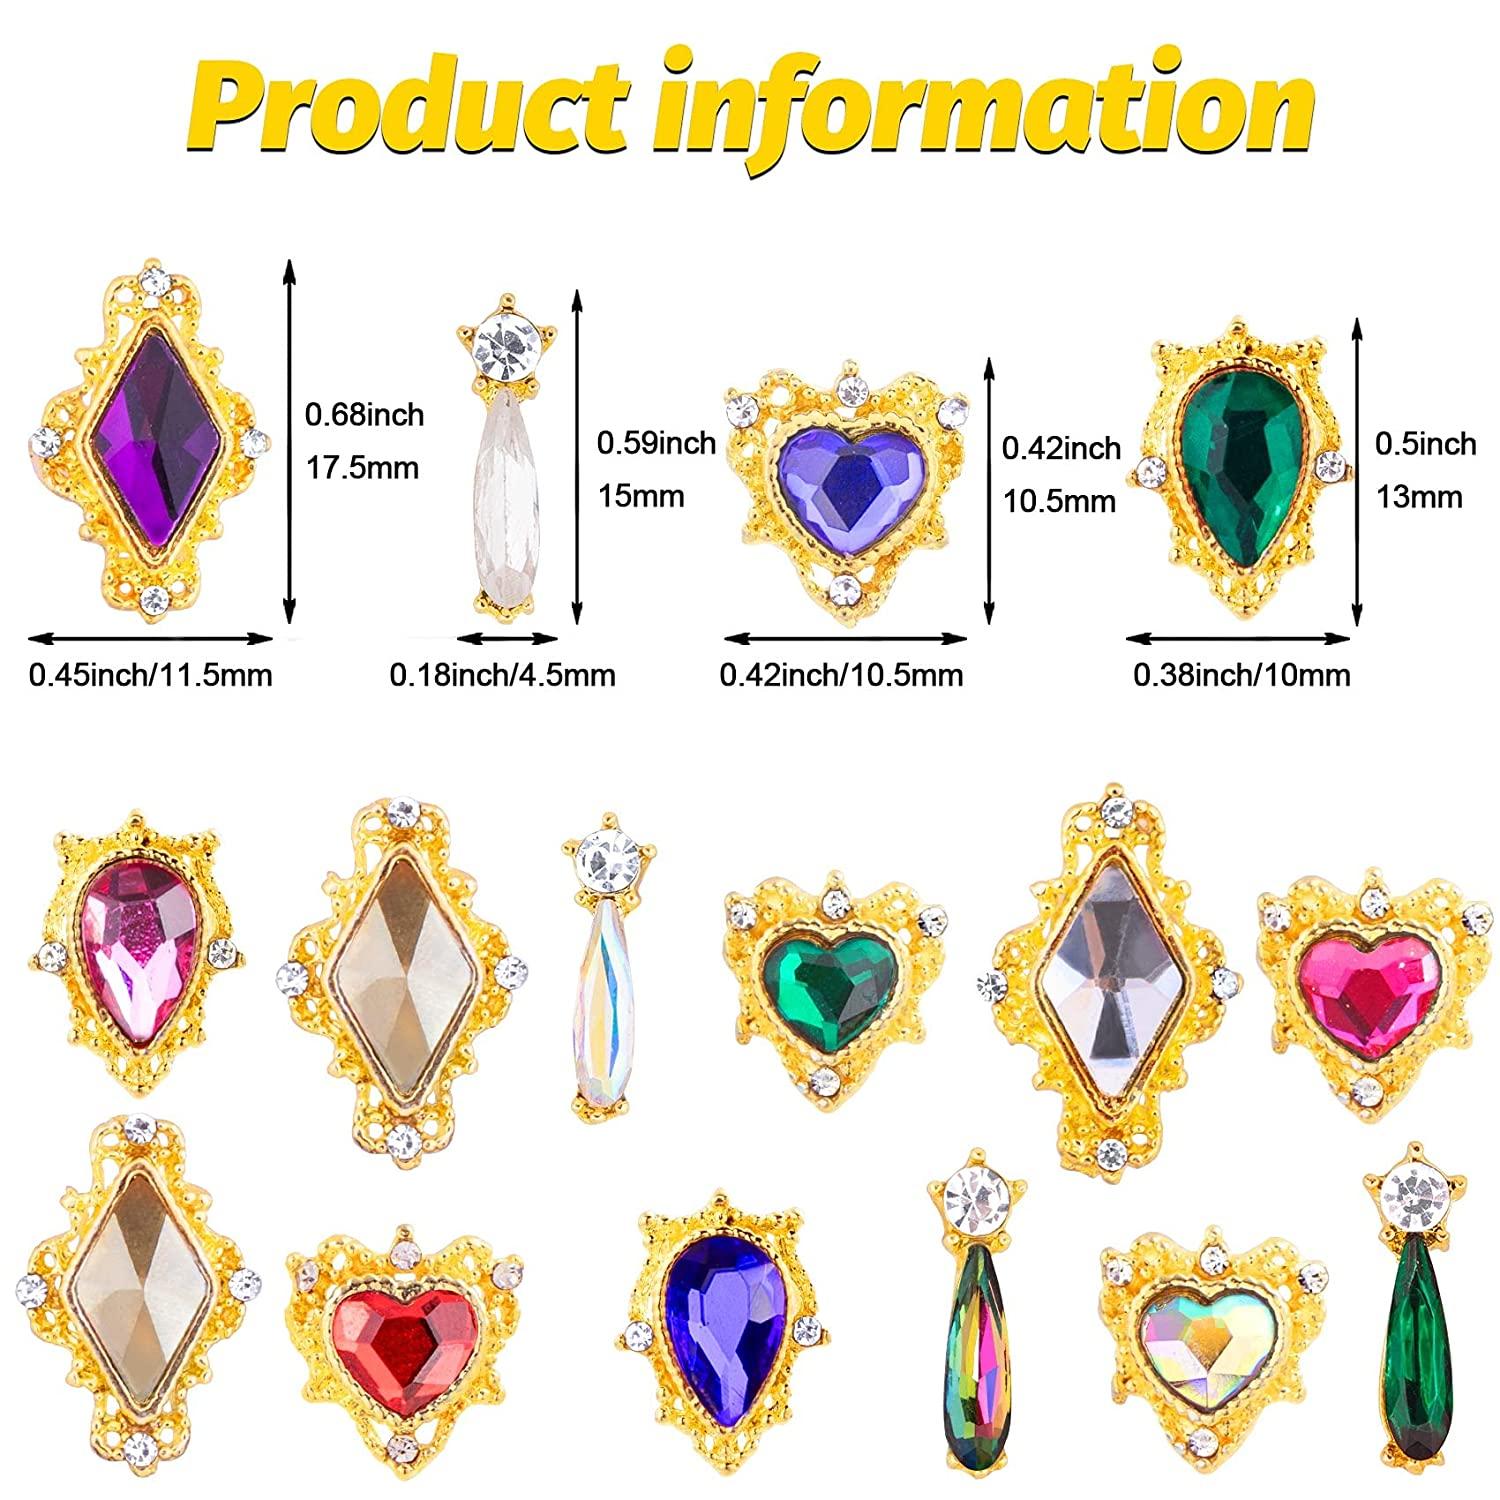 32pcs Craft Gems and Jewels